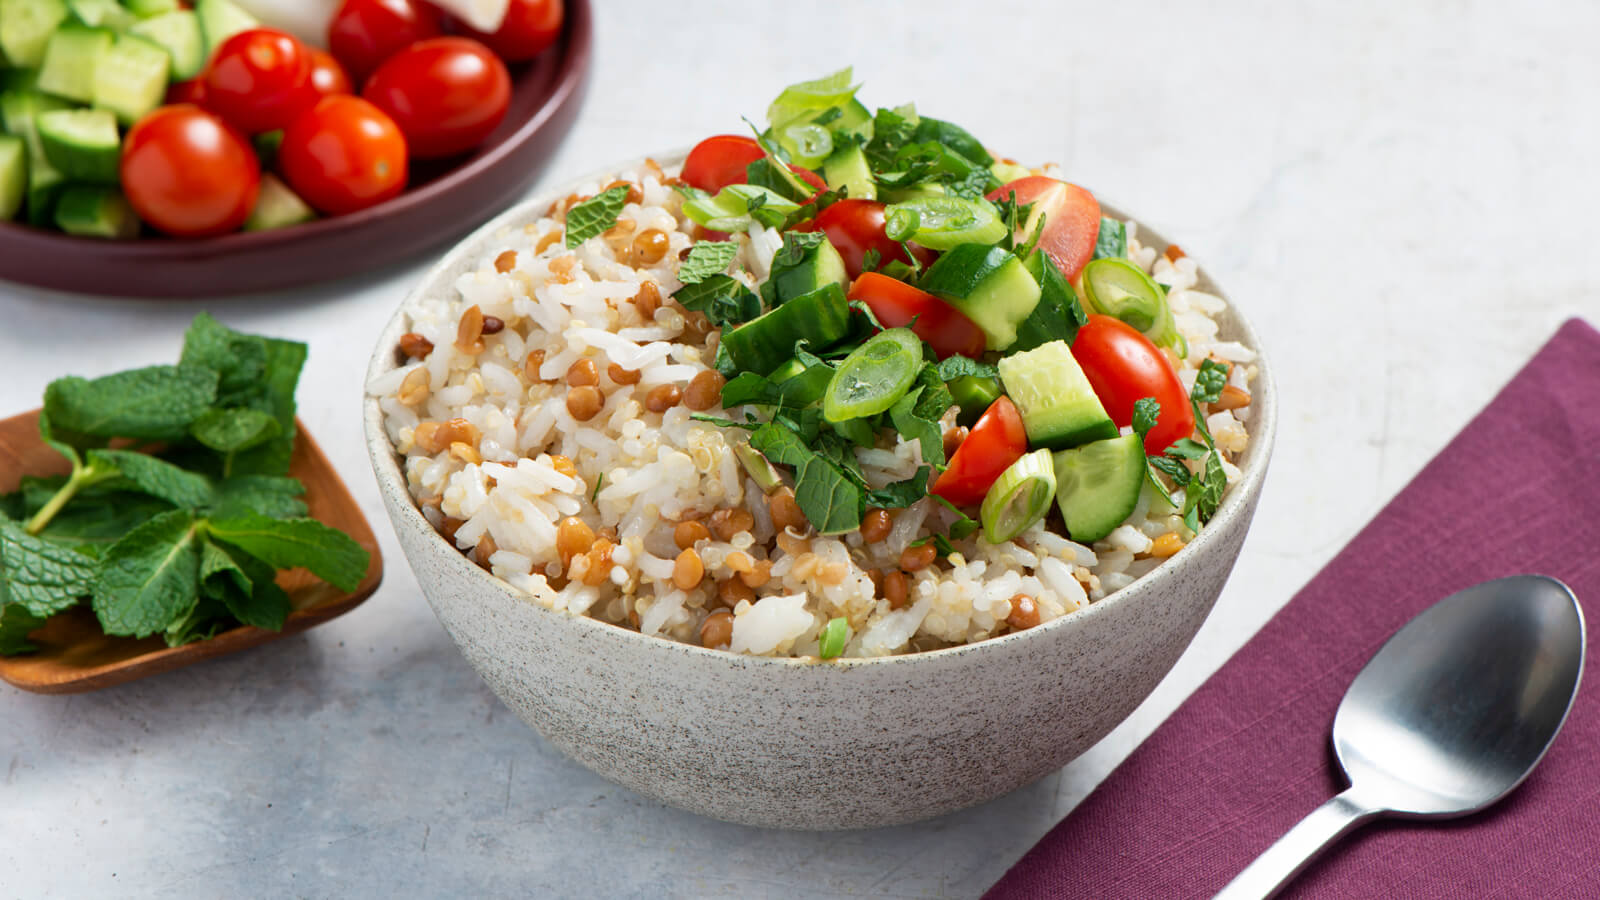 Celebrate Spring with Jasmine Rice and Quinoa Recipes